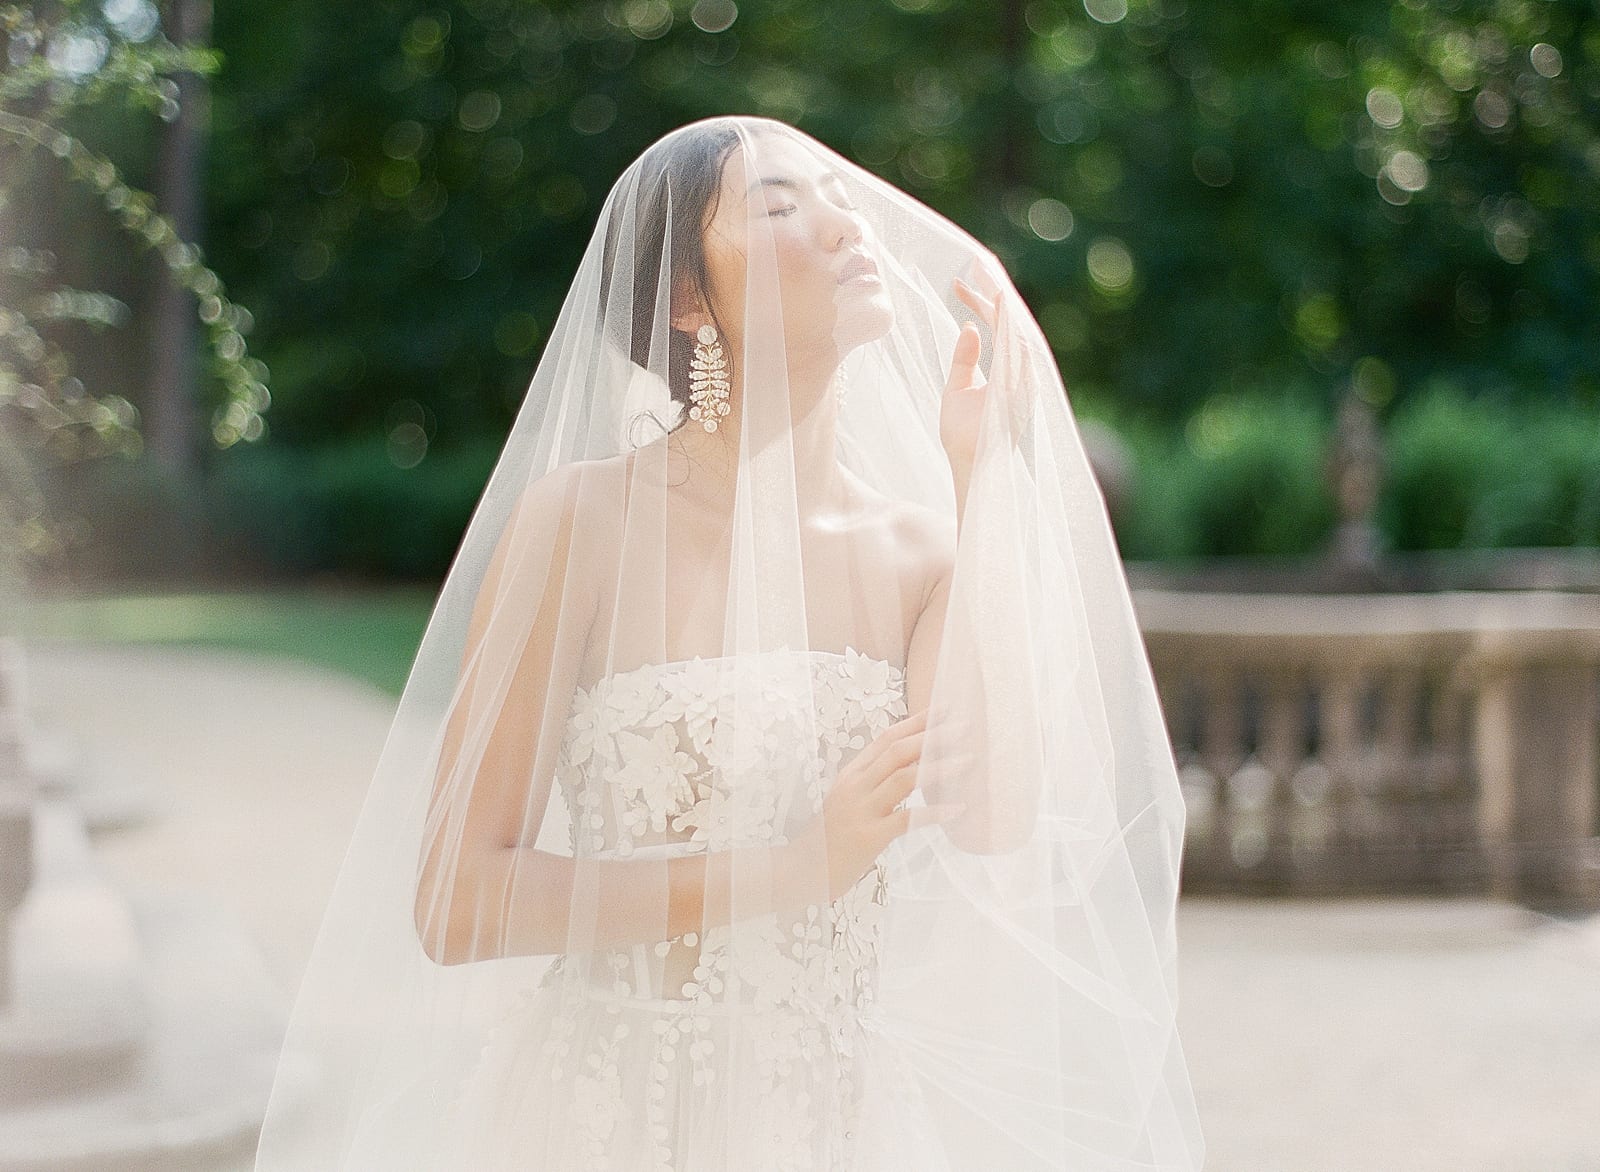 Swan House Atlanta Bride under veil in Sunlight Photo